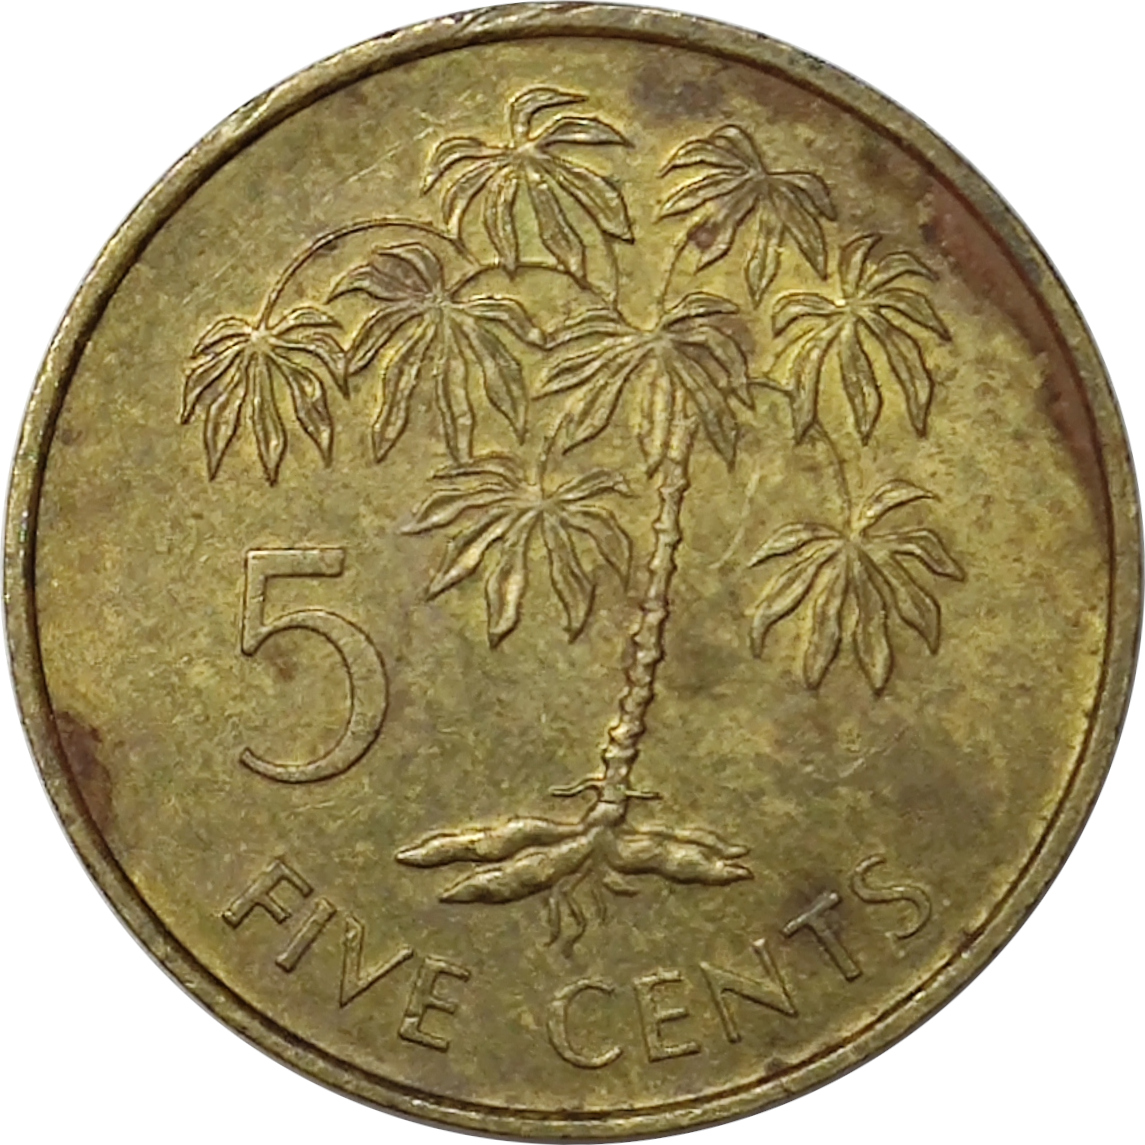 5 cents - Tapioca